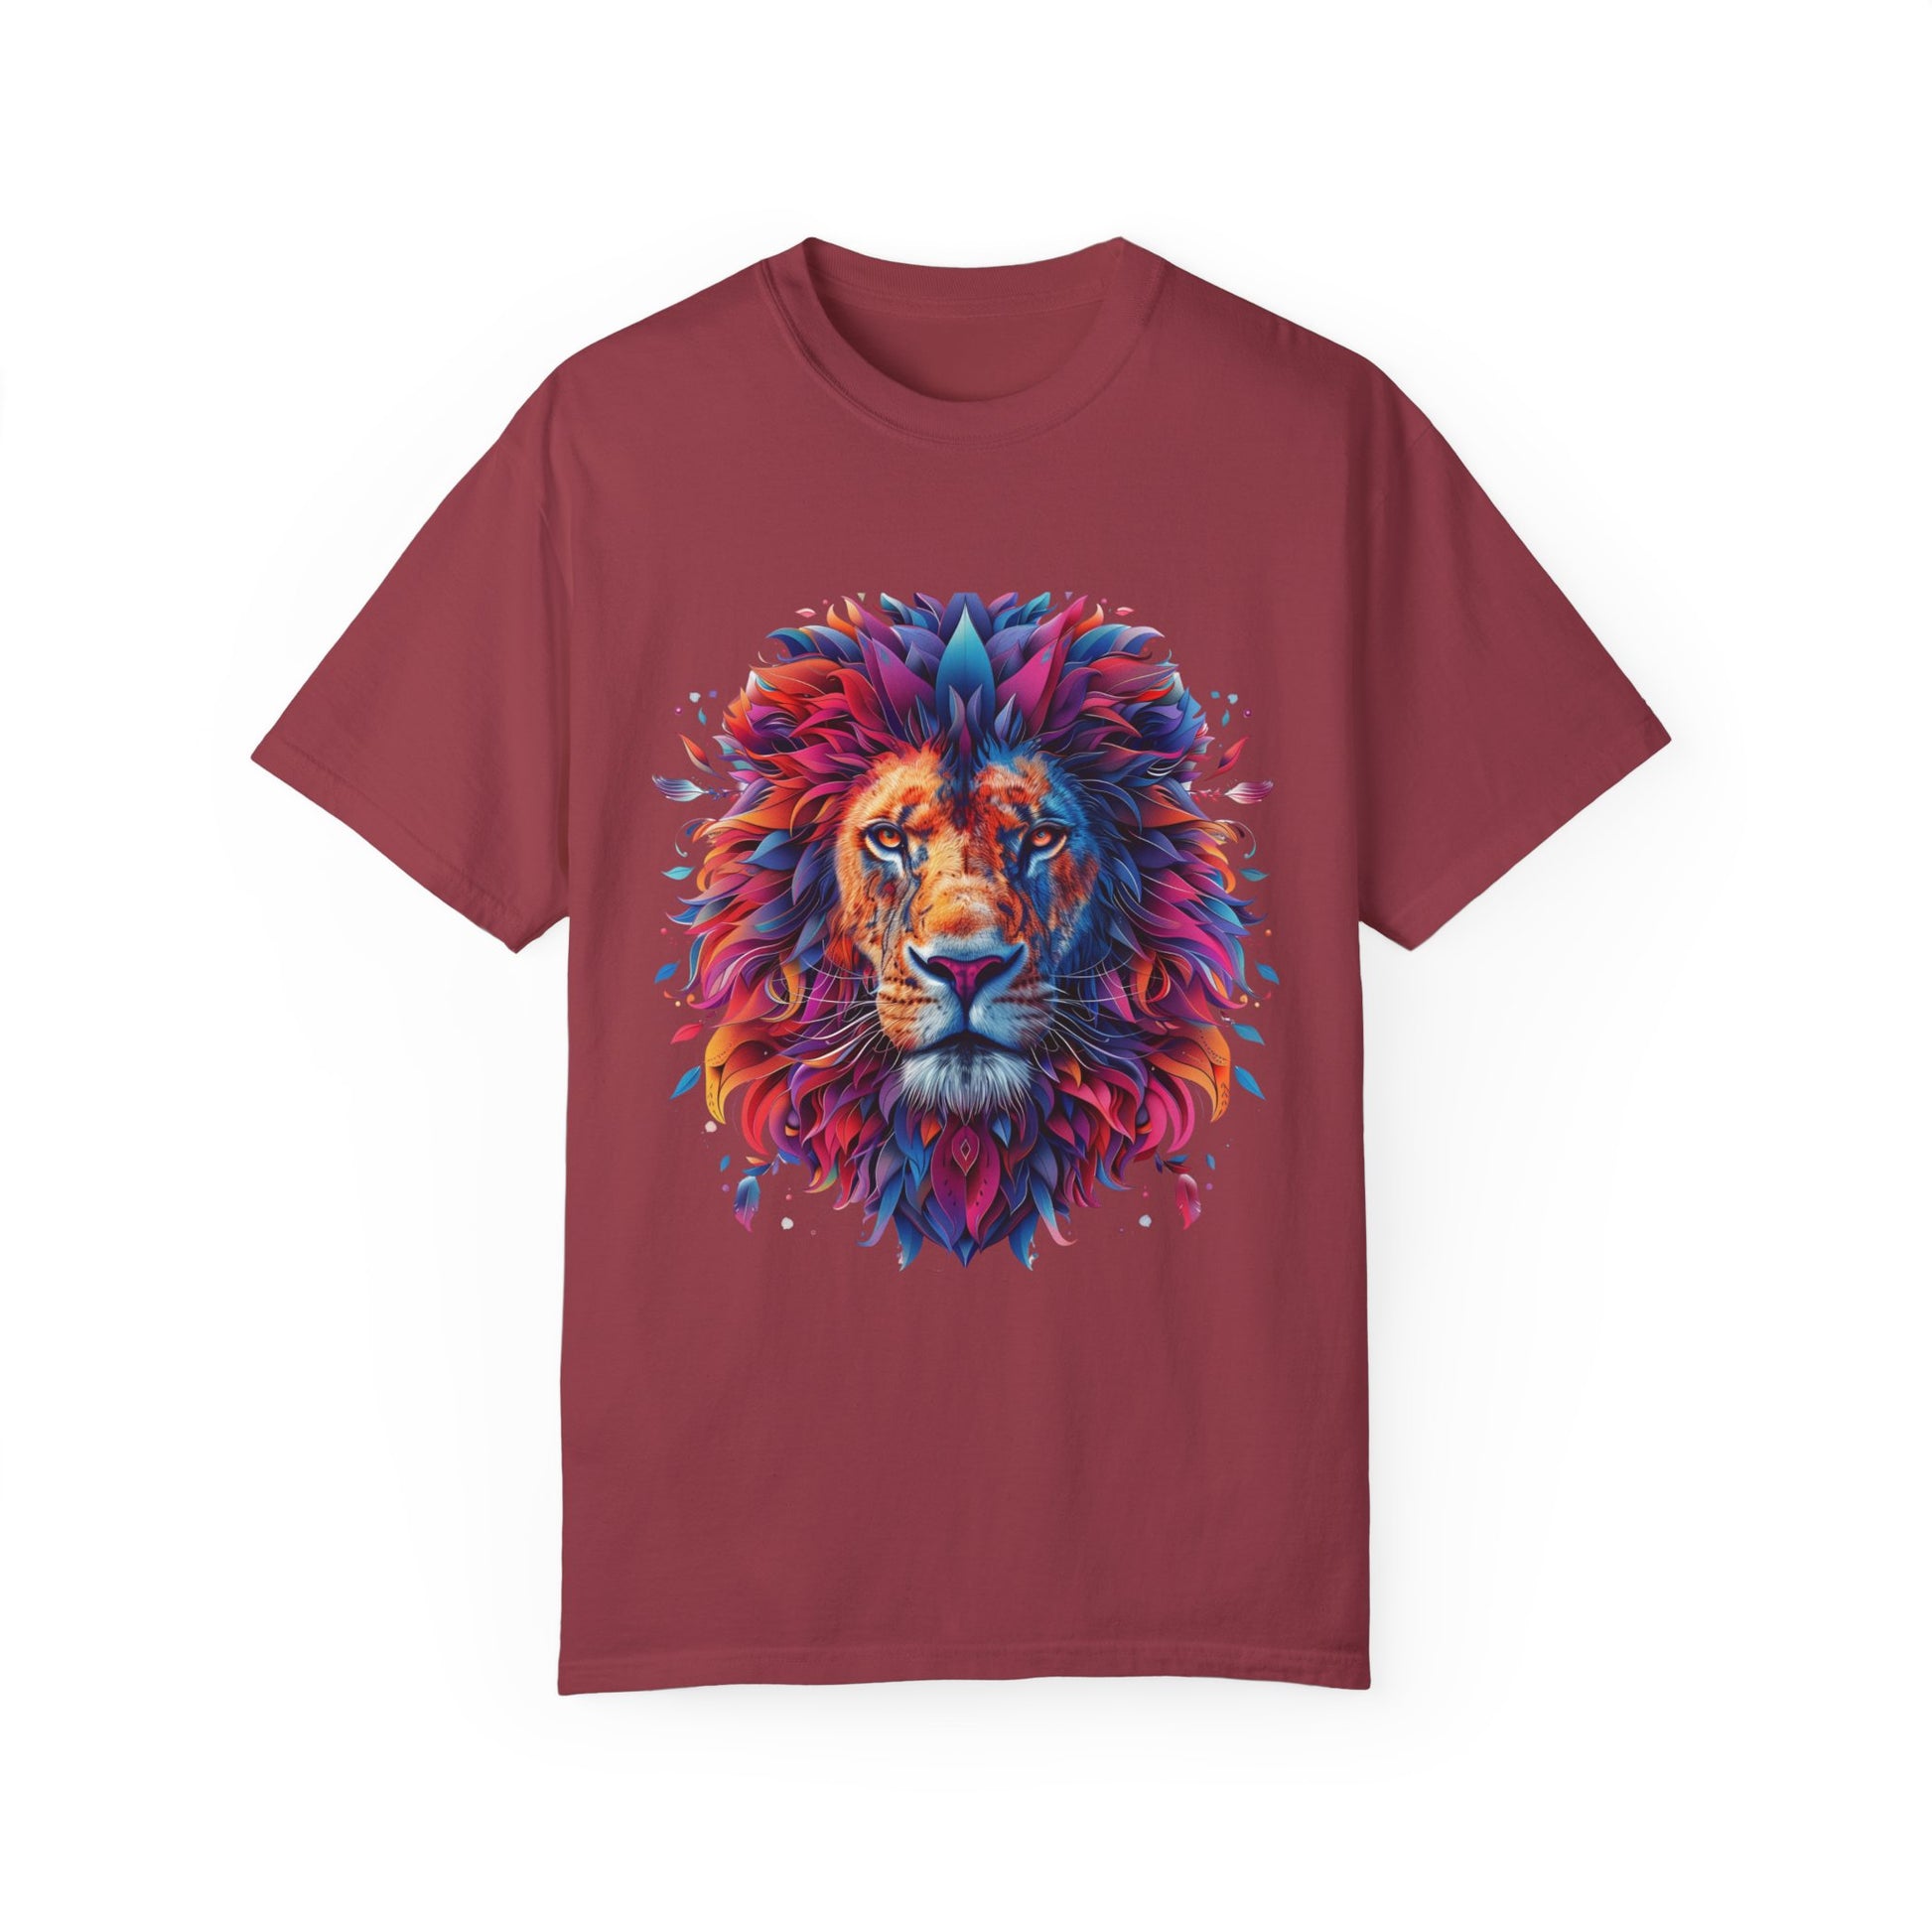 Lion Head Cool Graphic Design Novelty Unisex Garment-dyed T-shirt Cotton Funny Humorous Graphic Soft Premium Unisex Men Women Chili T-shirt Birthday Gift-7